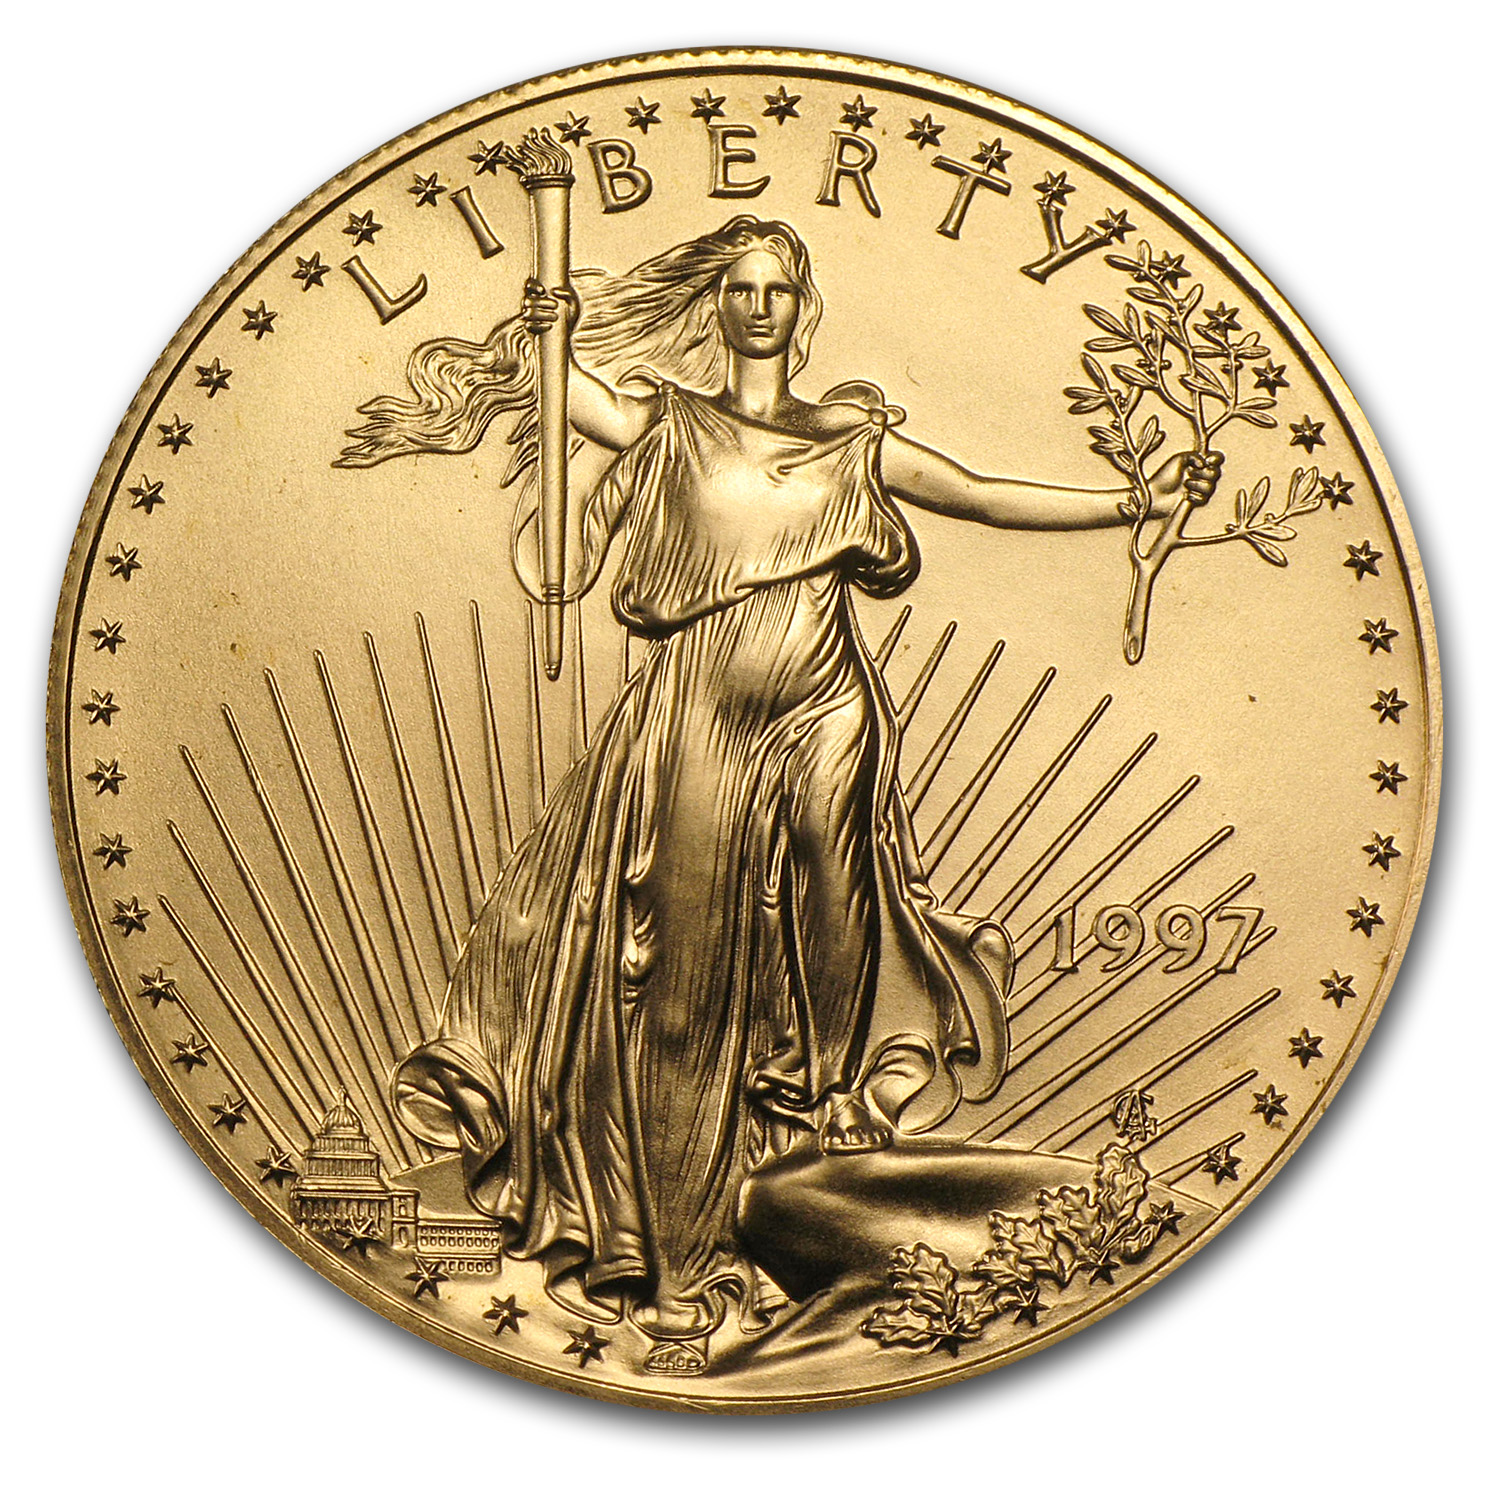 Buy 1997 1 oz American Gold Eagle BU Coins Online